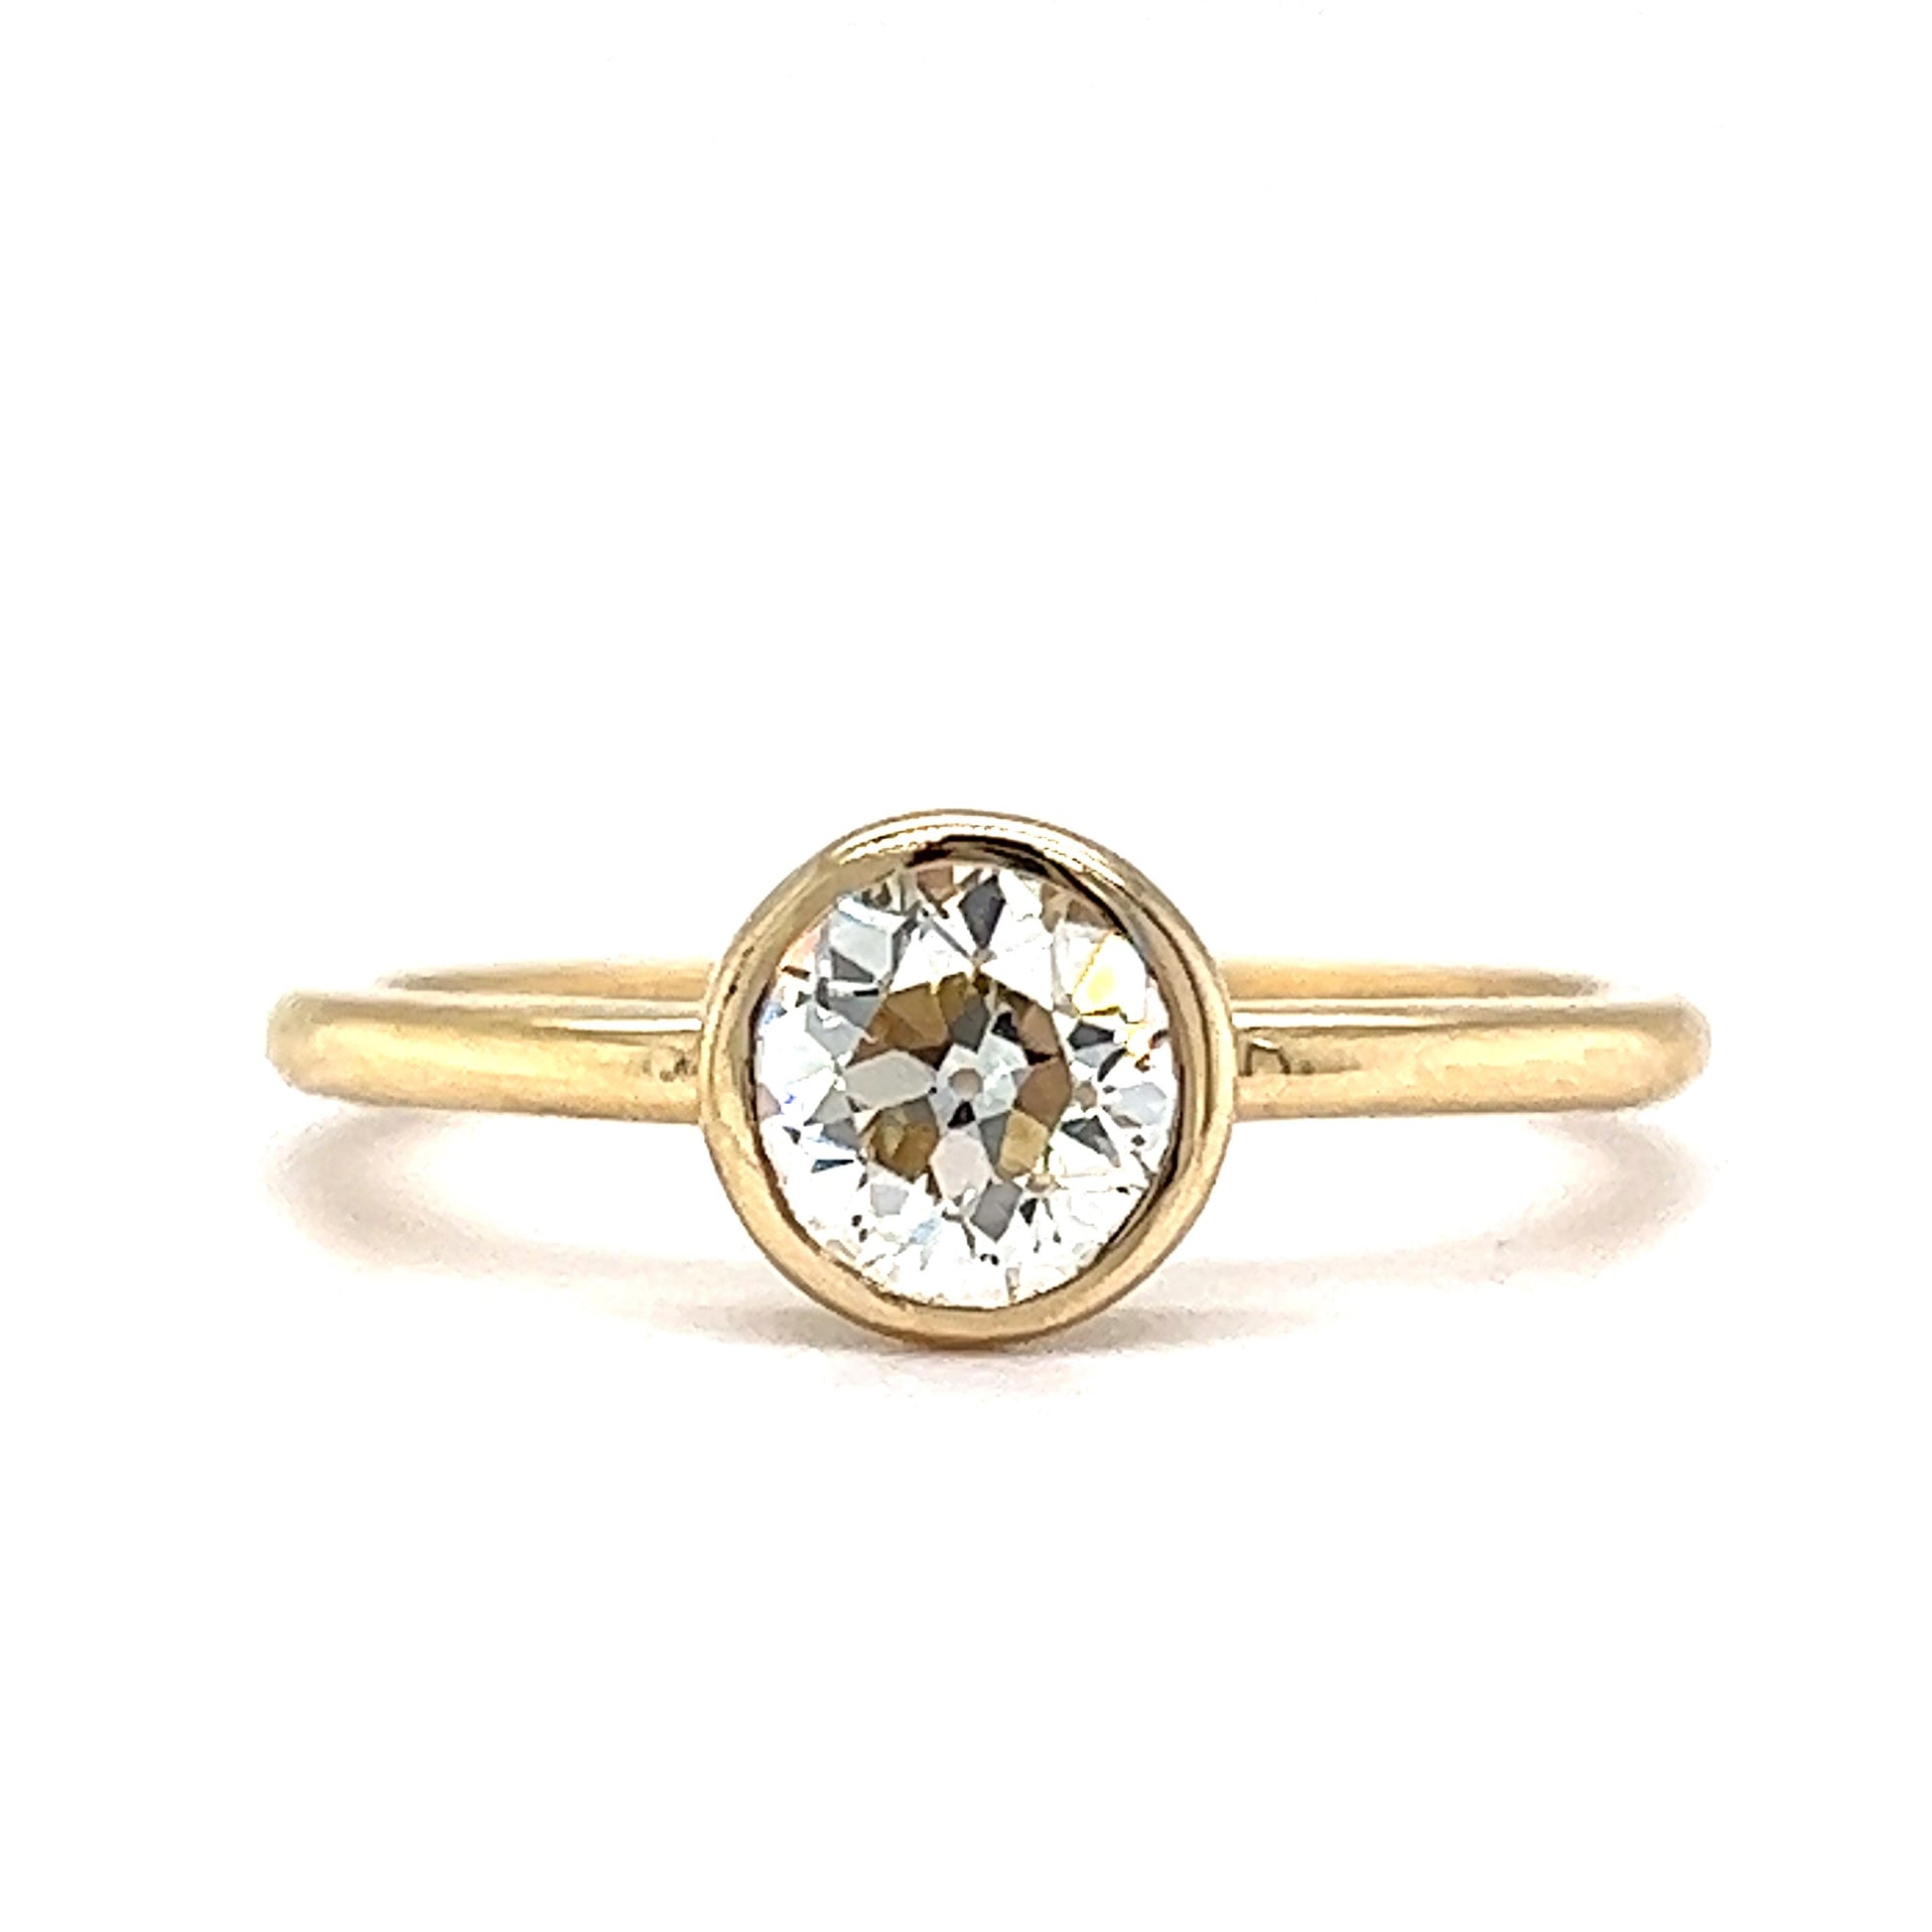 .78 Old European Cut Diamond Engagement Ring in 14k Yellow Gold